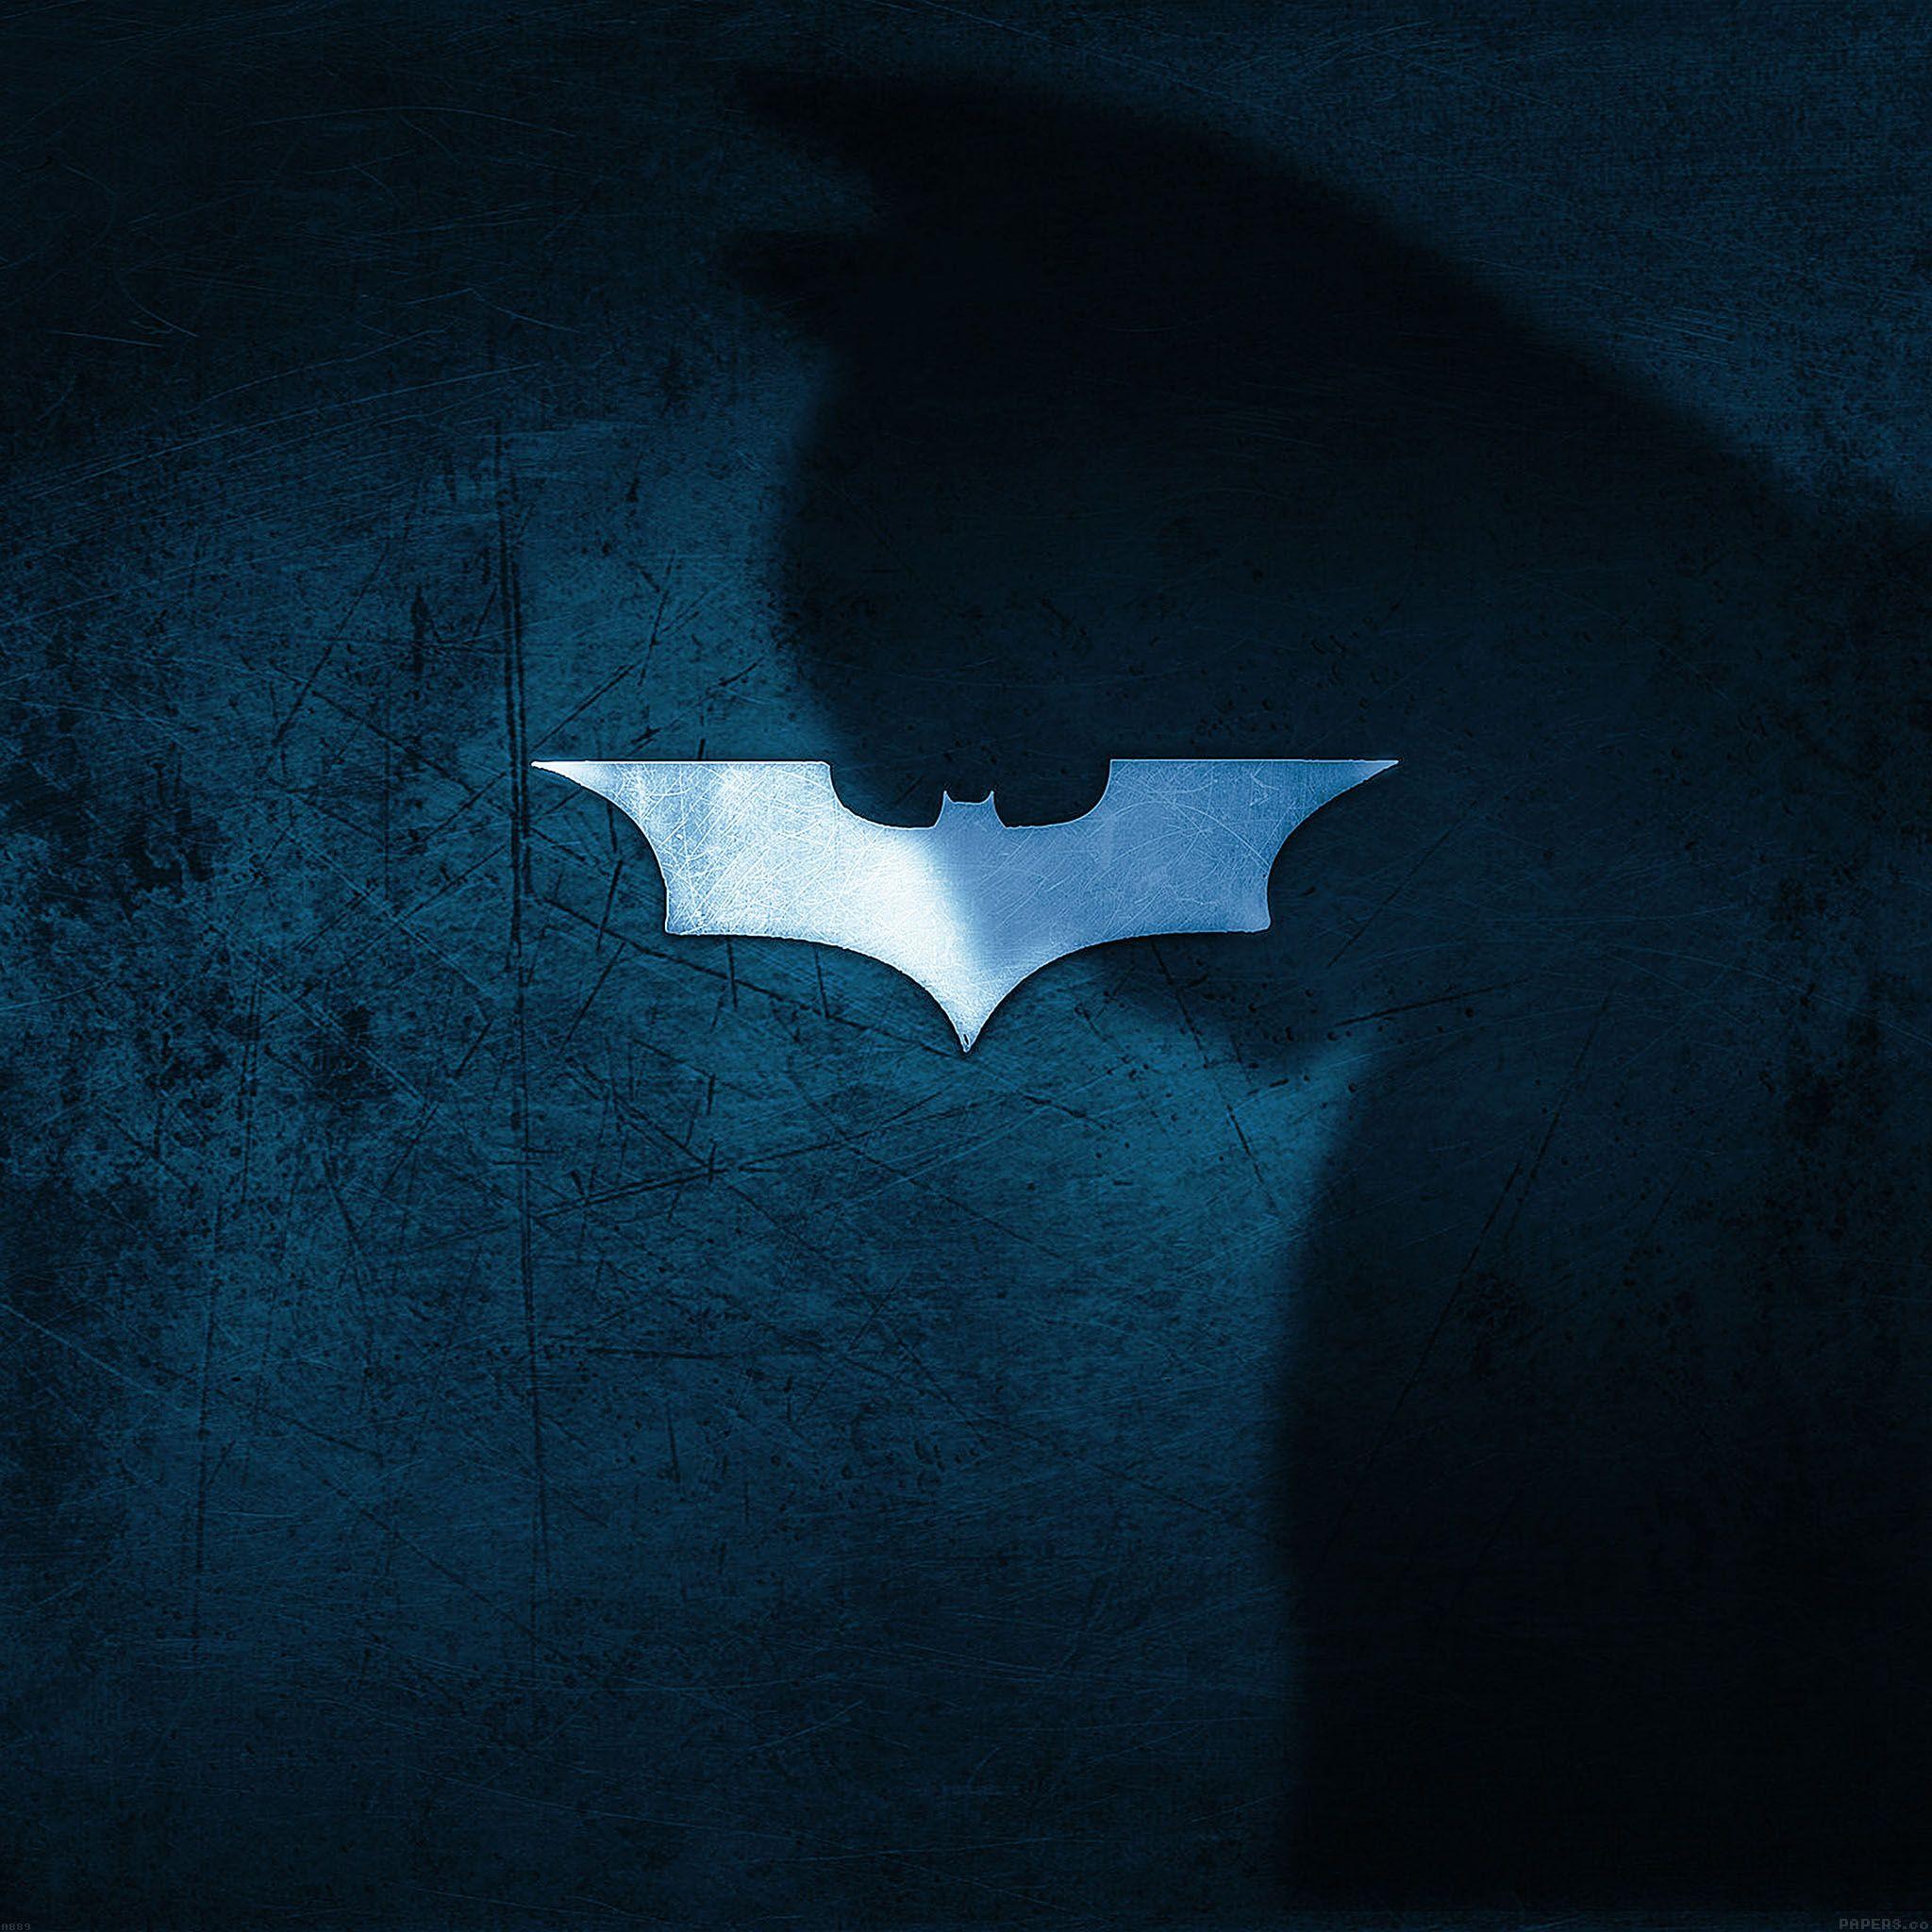 Wallpaper: Batman Protects Gotham City on Your iPad